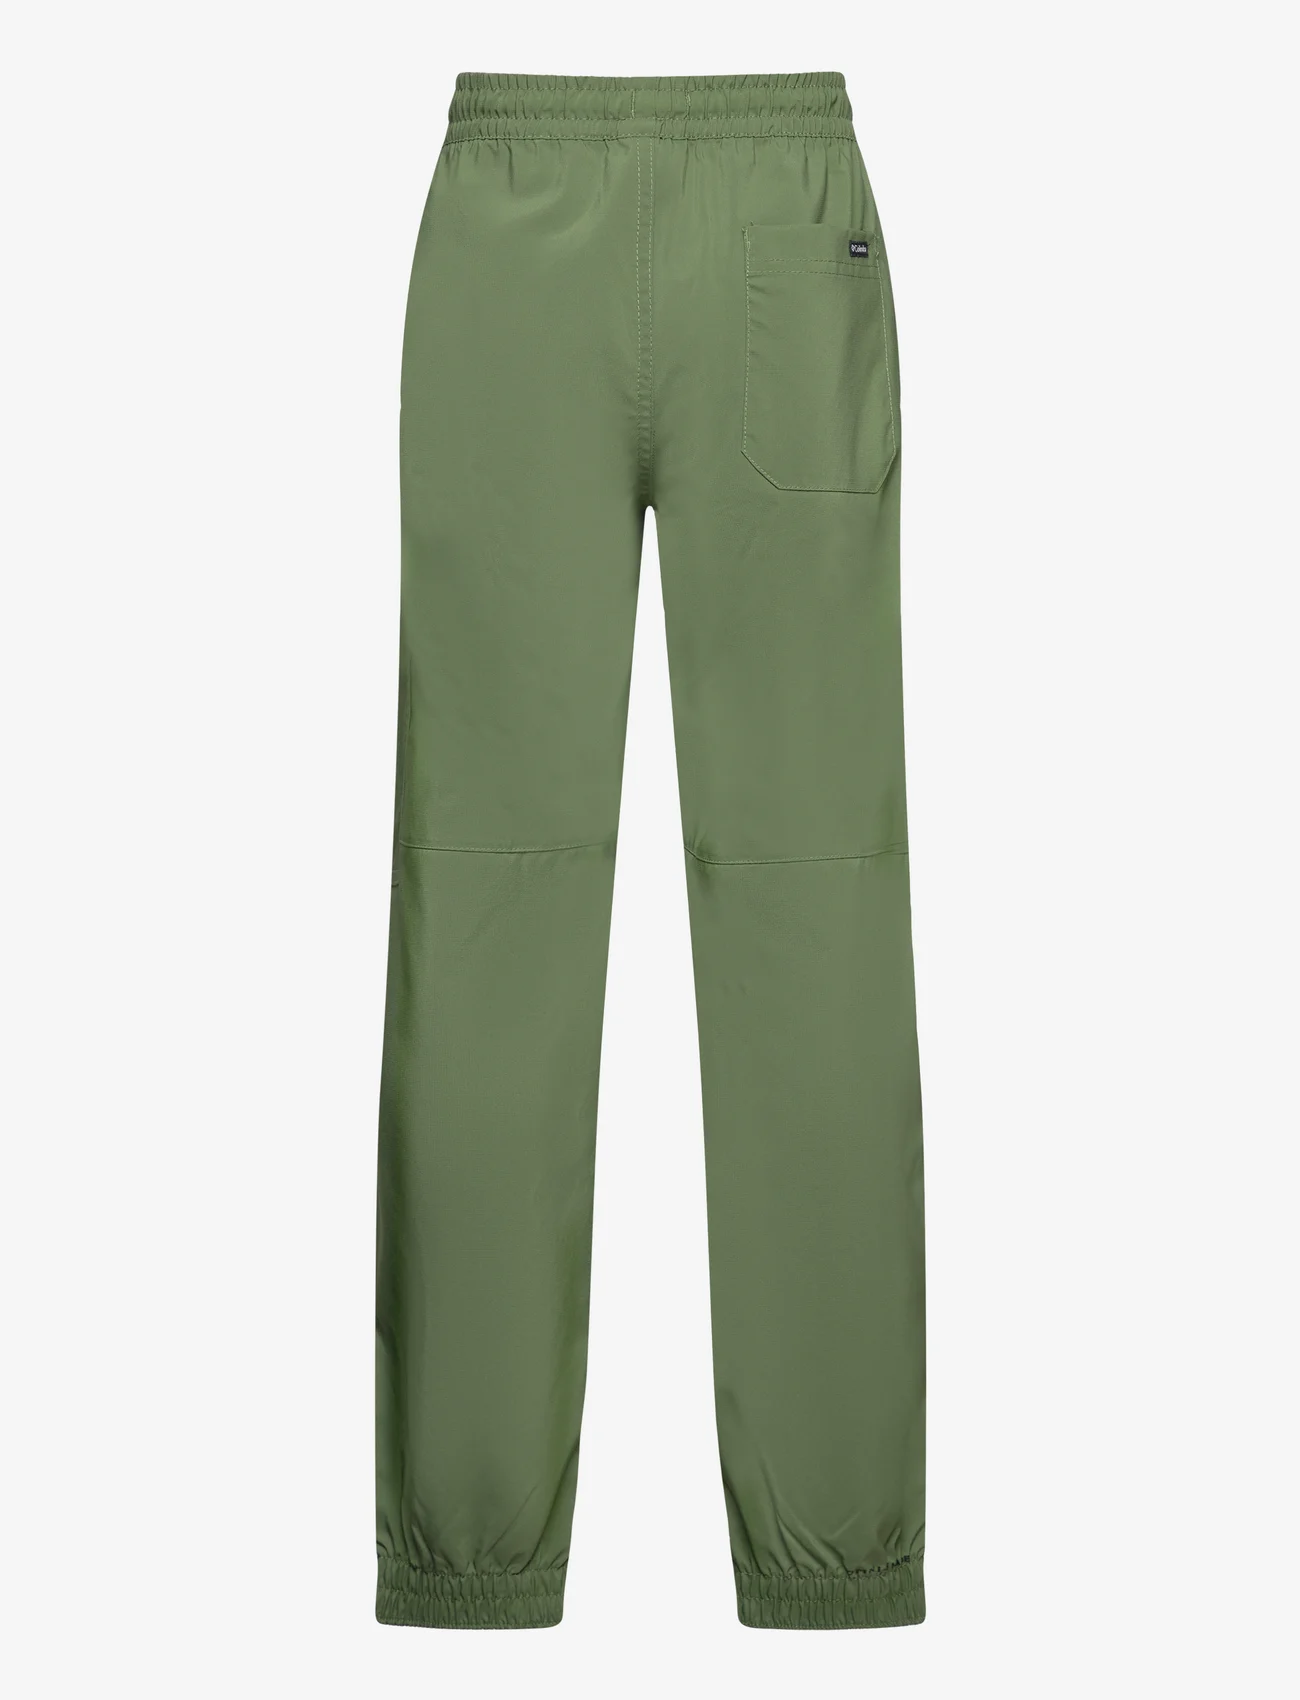 Columbia Sportswear - Silver Ridge Utility Cargo Pant - lauko kelnės - canteen - 1